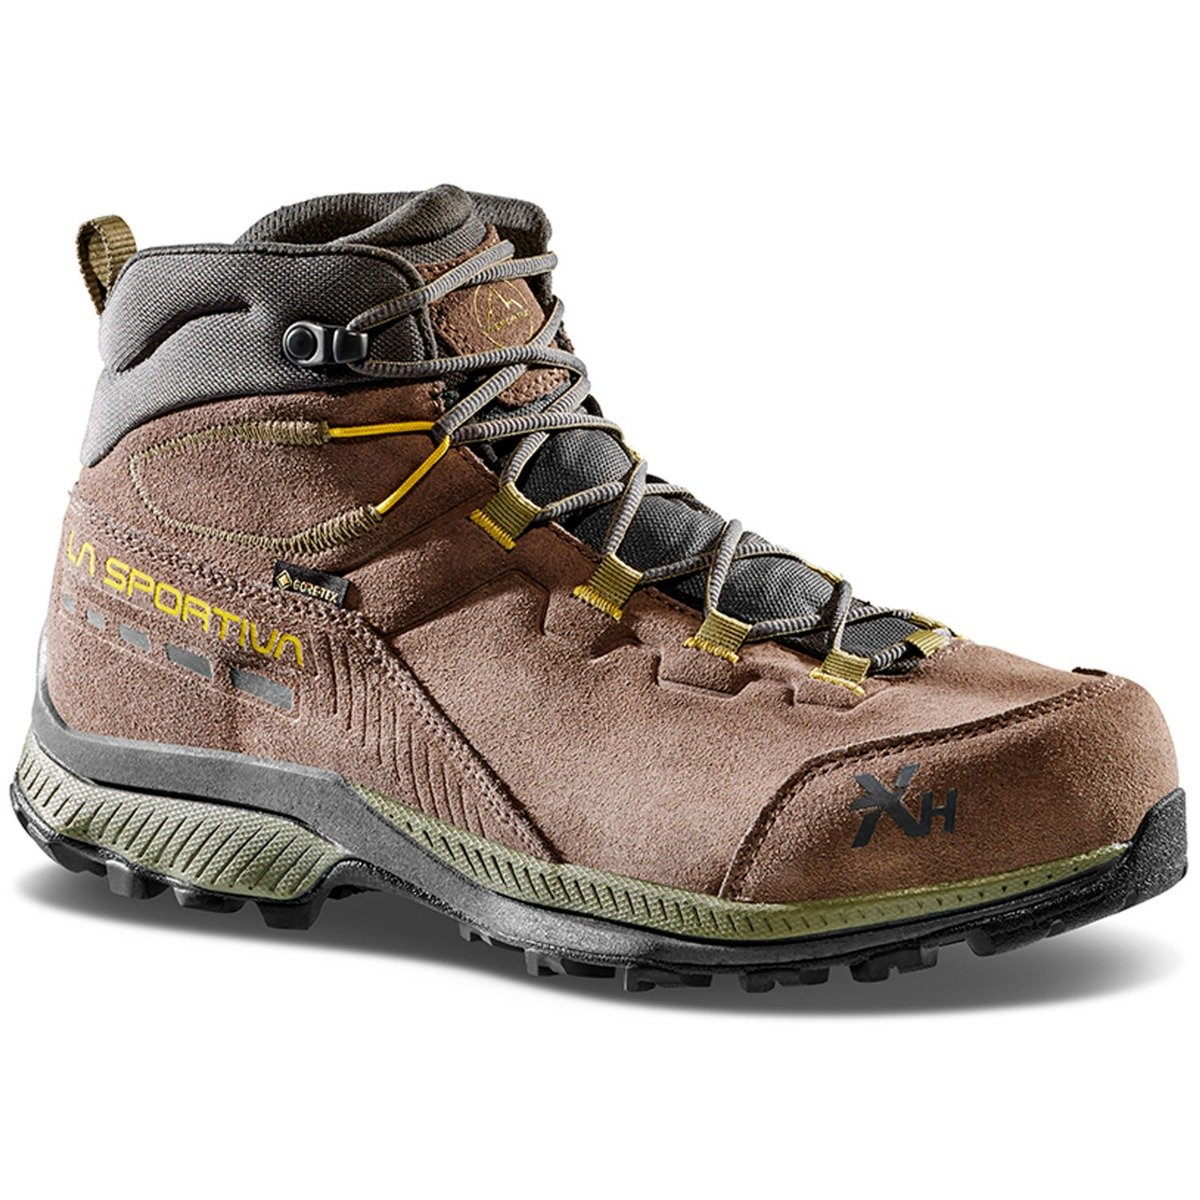 La Sportiva TX Leather GTX Mid Hiking Boots